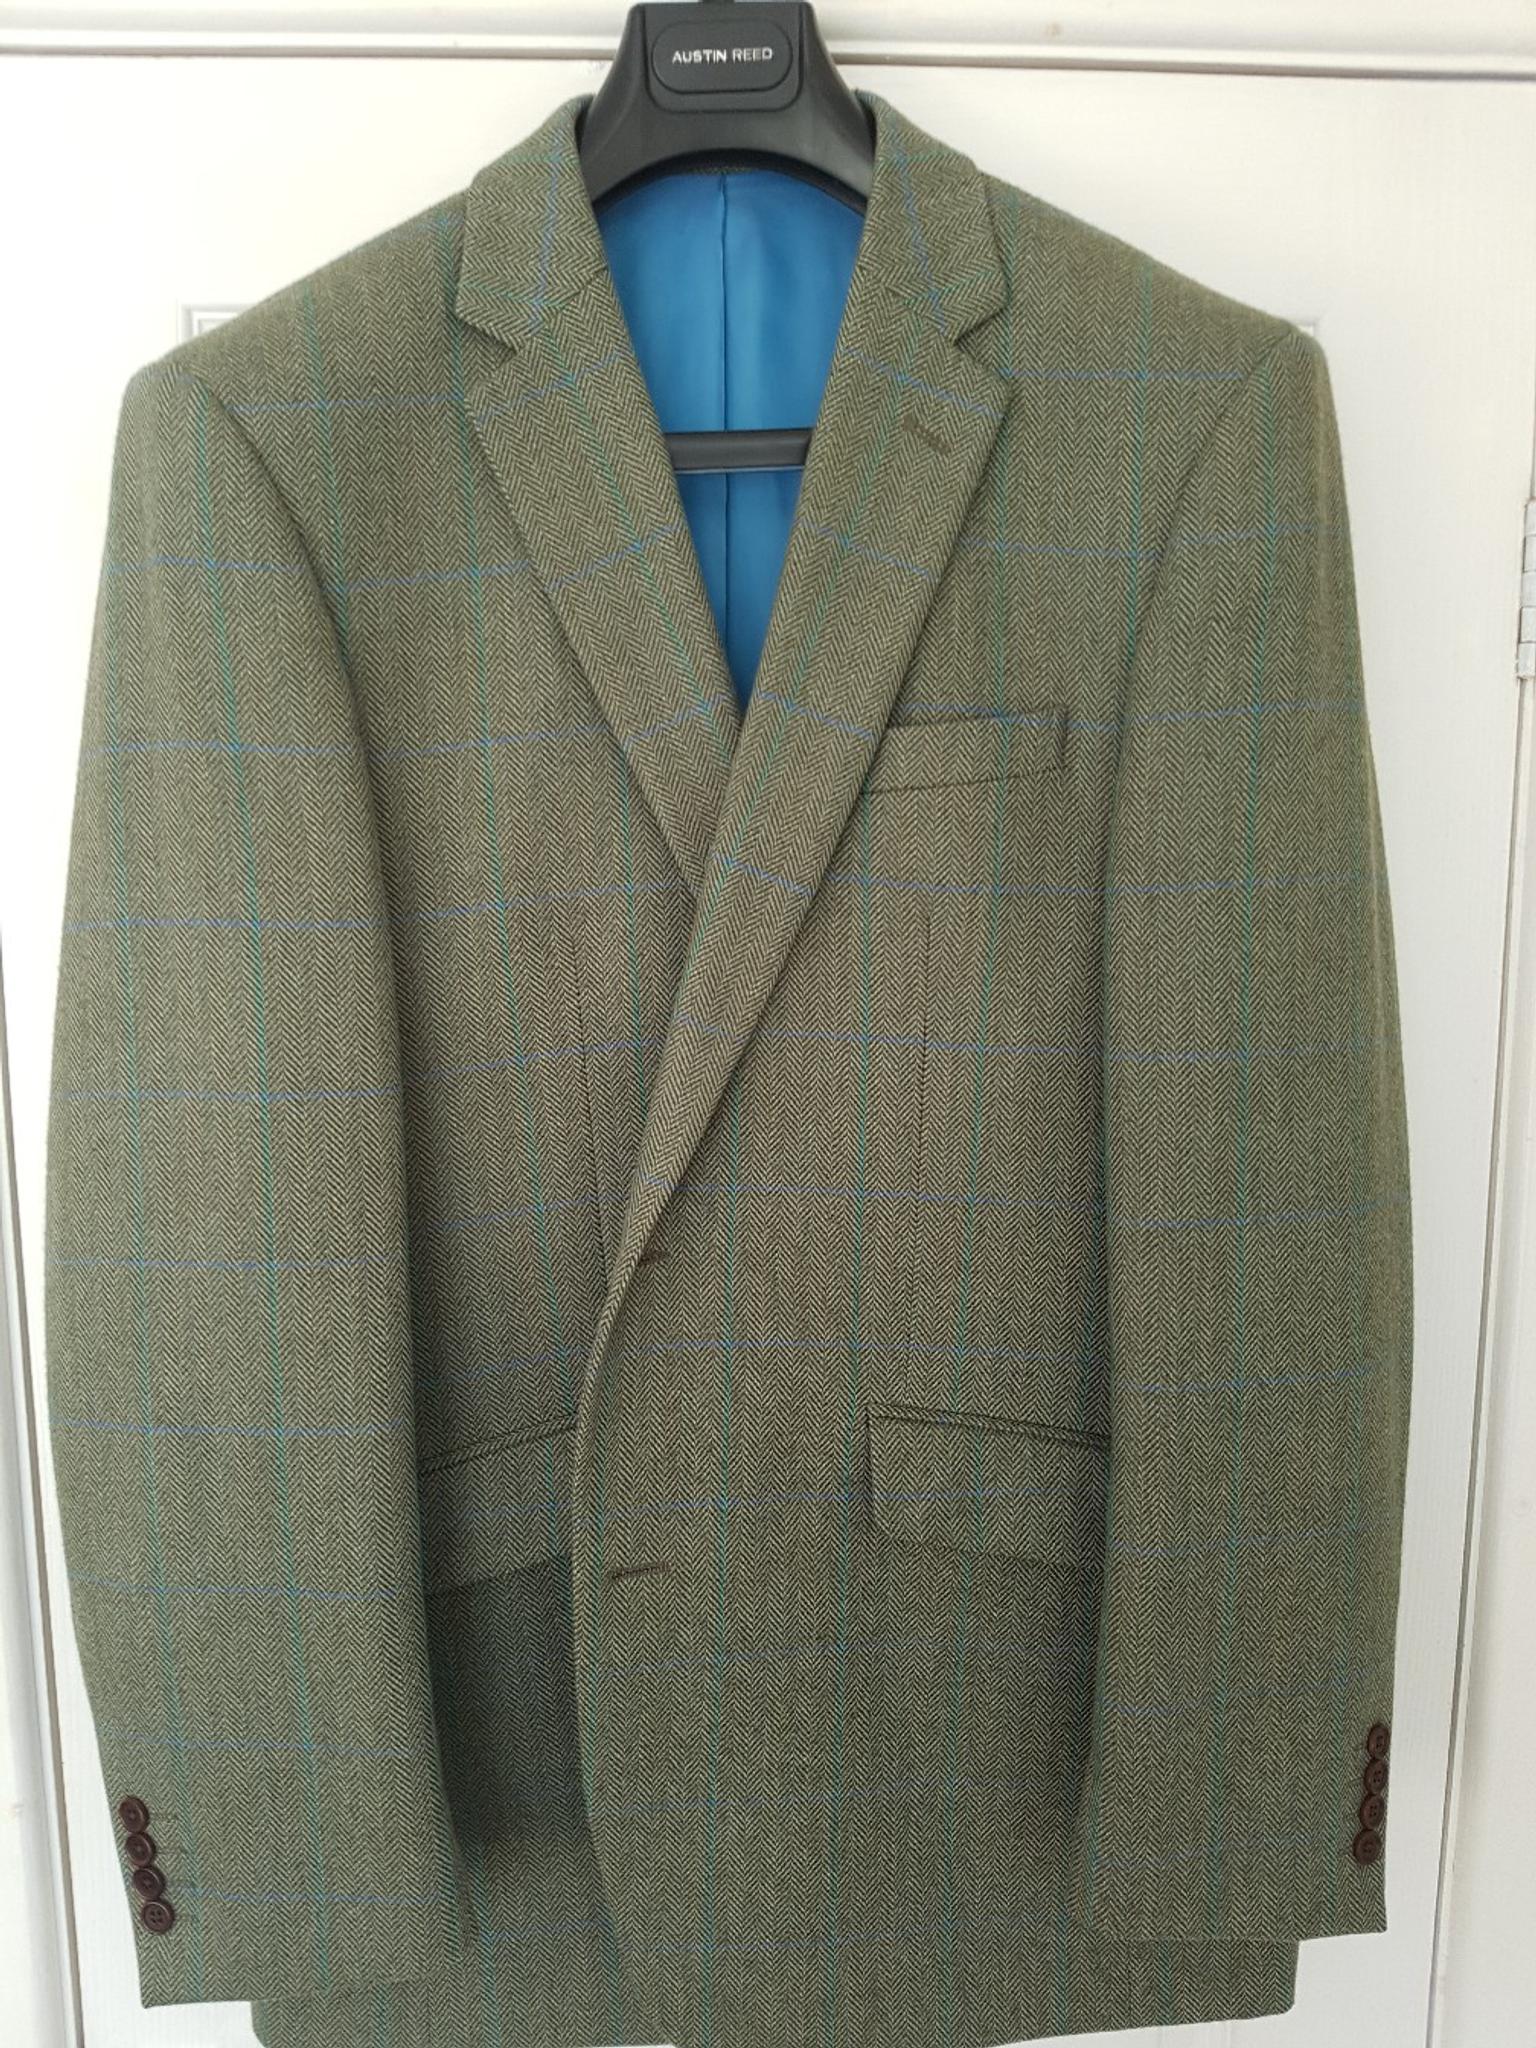 Mens Tweed Jacket Austin Reed 46r In Wv6 Wolverhampton For 20 00 For Sale Shpock